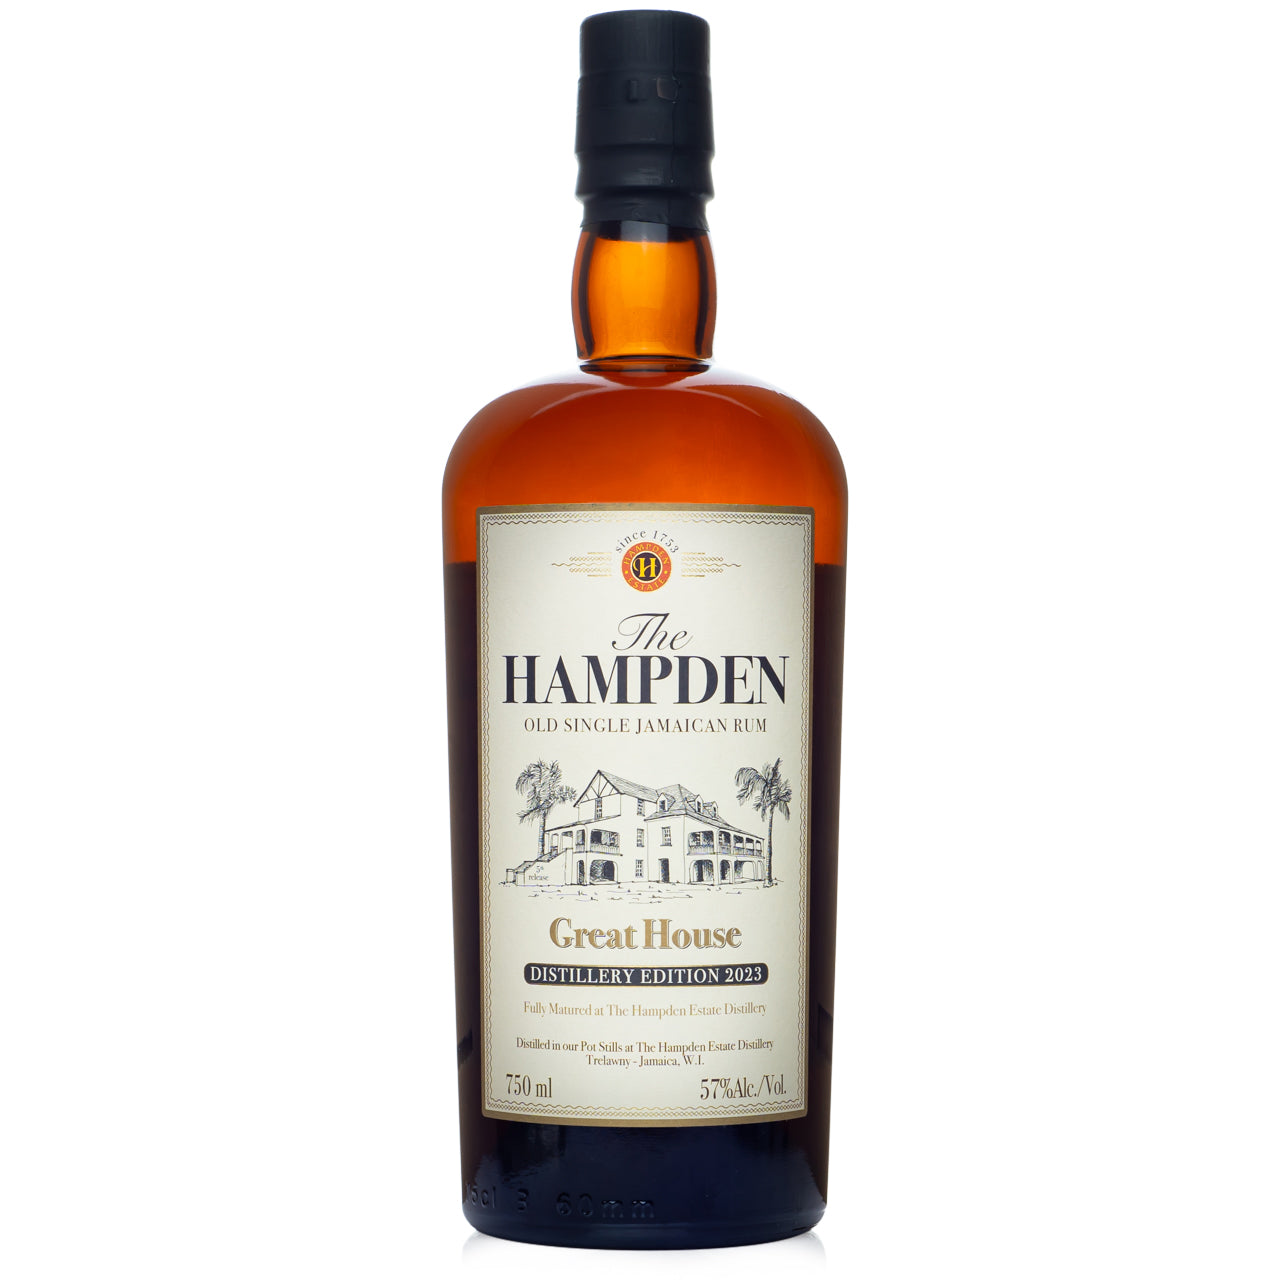 Hampden "Great House" Distillery Edition 2023 Rum